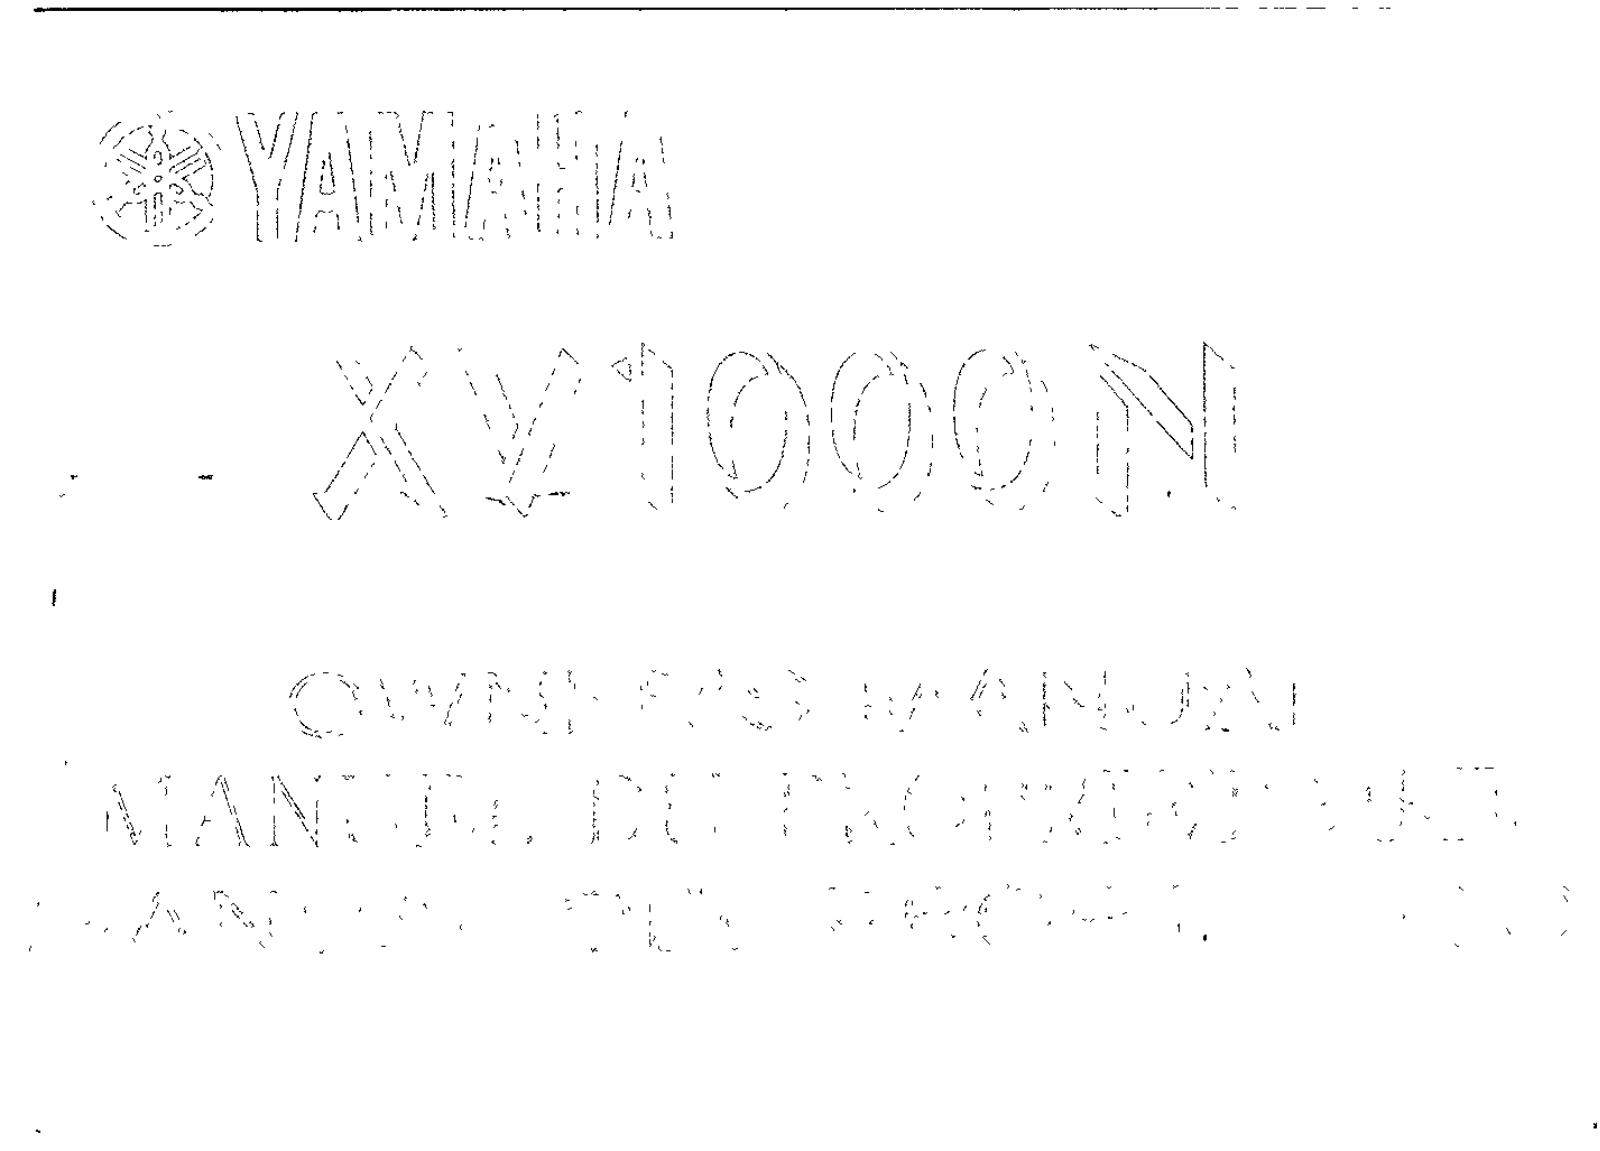 Yamaha XV1000 N 1985 Owner's manual